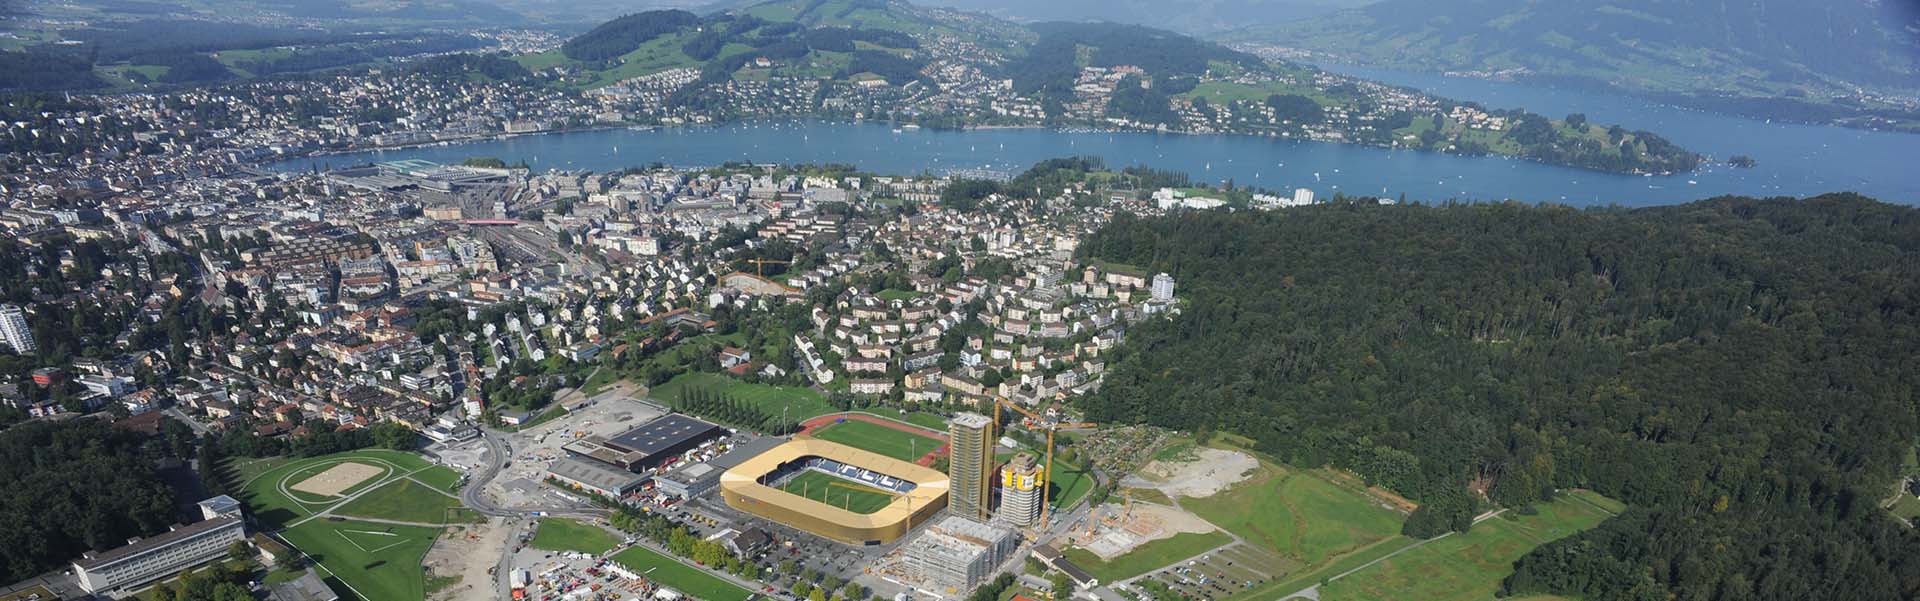 Top Escort Schweiz | Escort Allmend